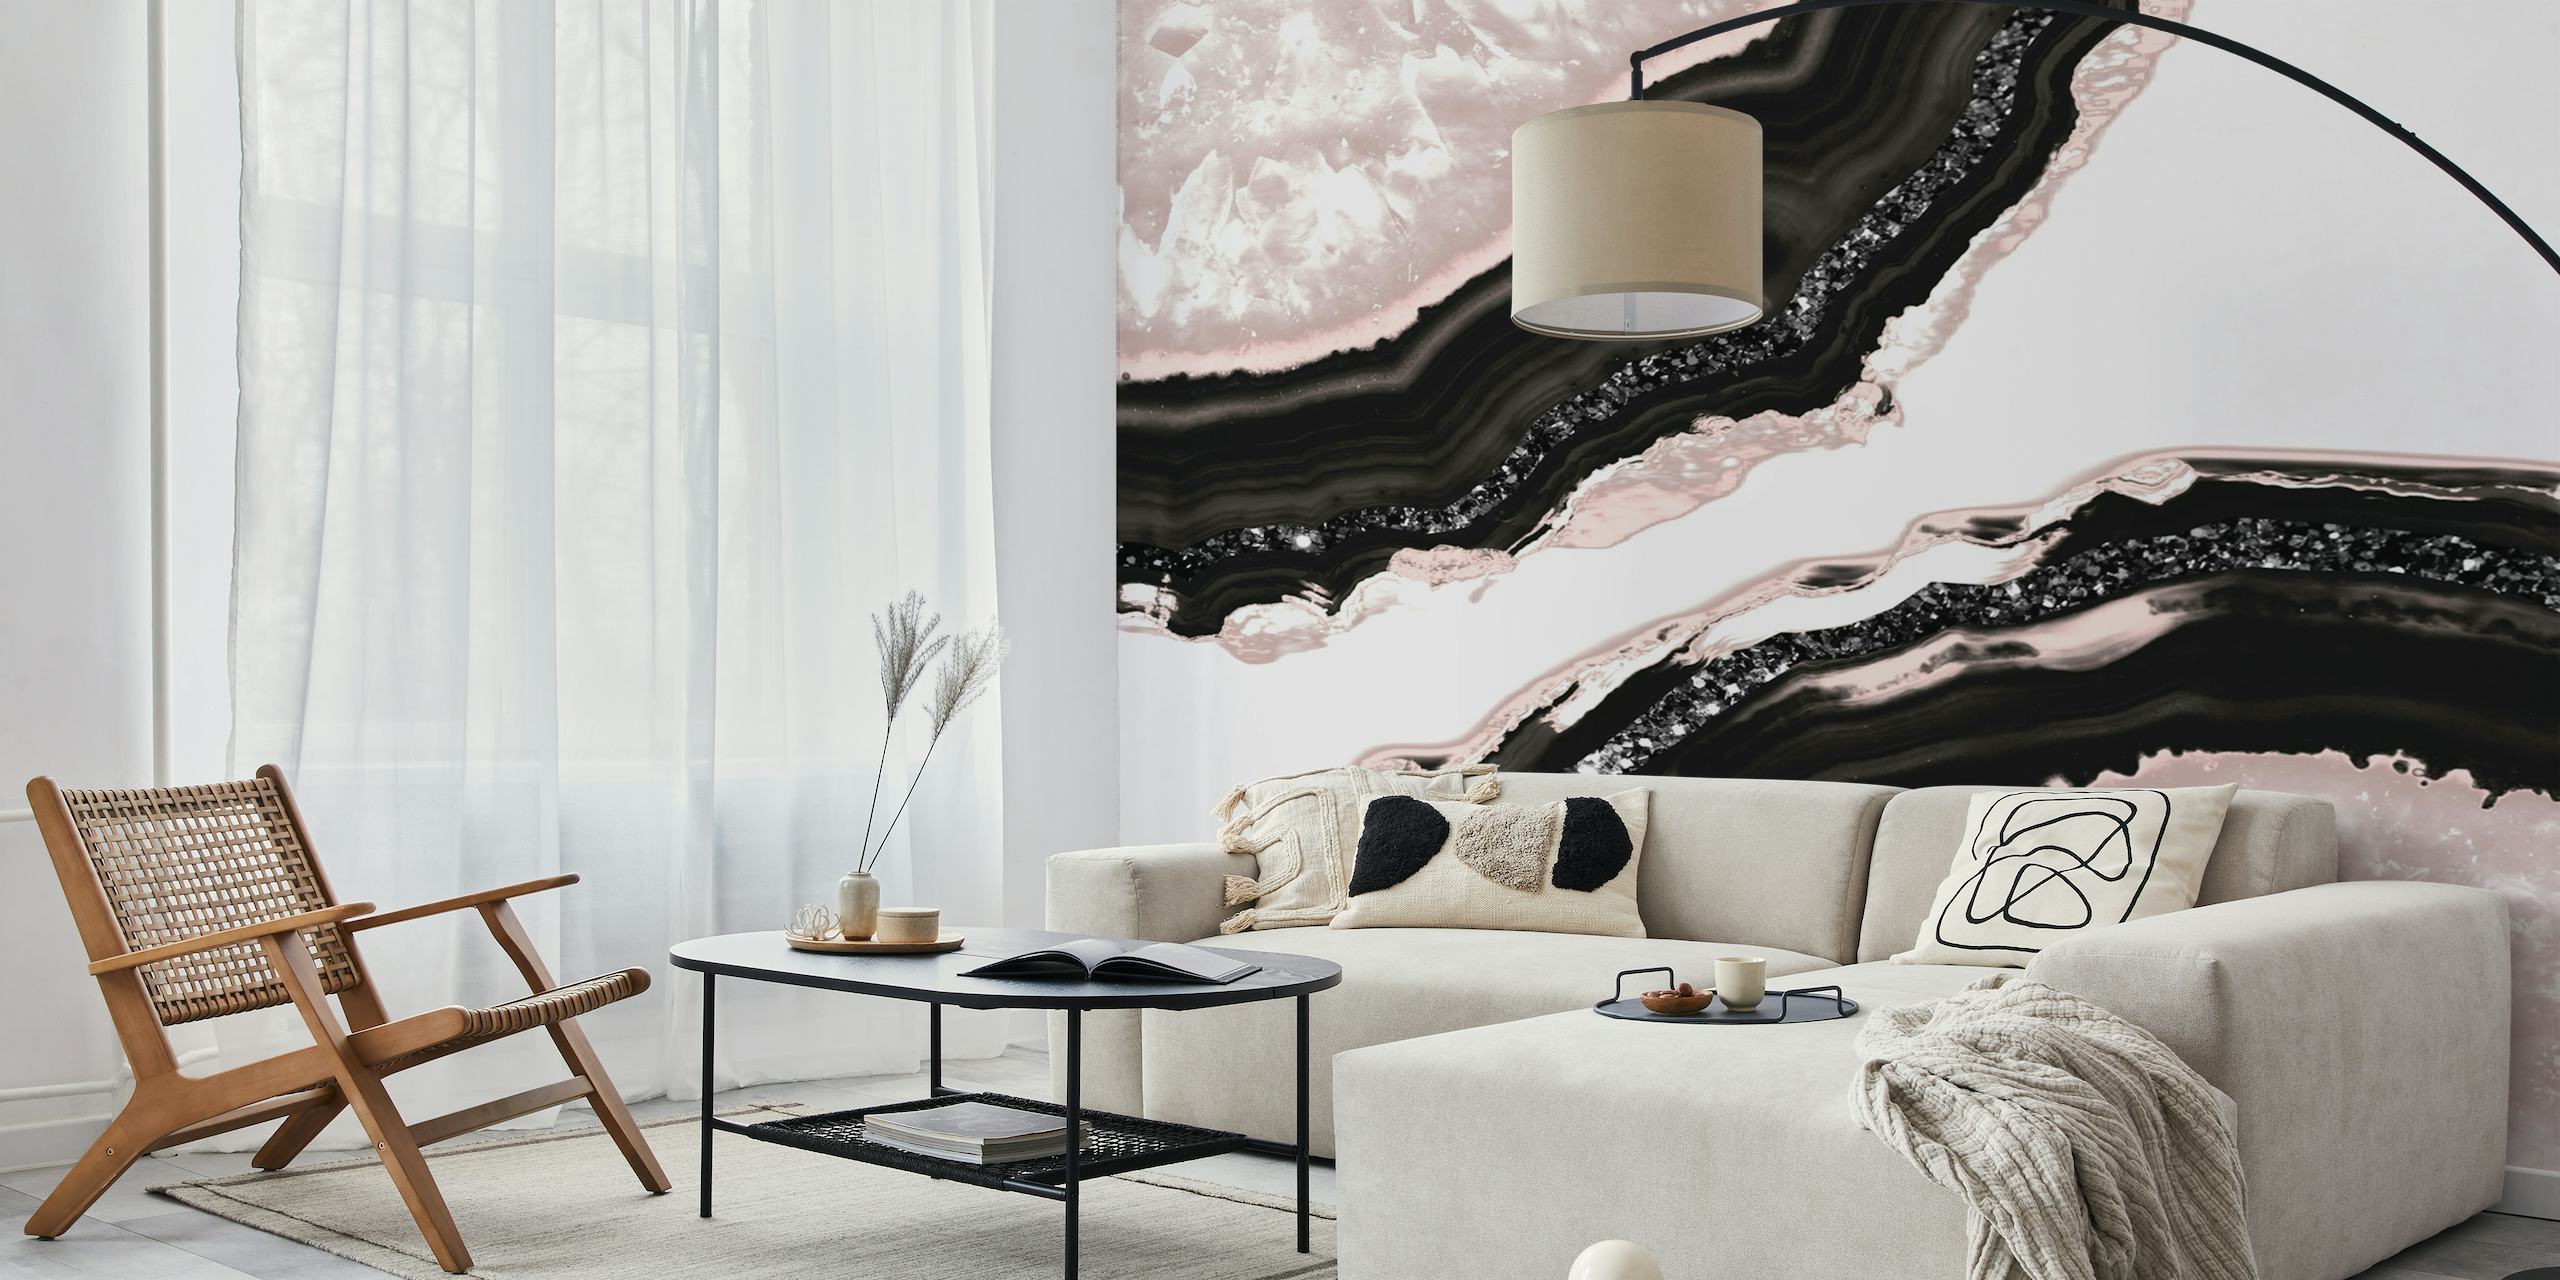 Stilfuldt agat-inspireret vægmaleri med sorte, hvide og bløde lyserøde mønstre og glitteraccenter